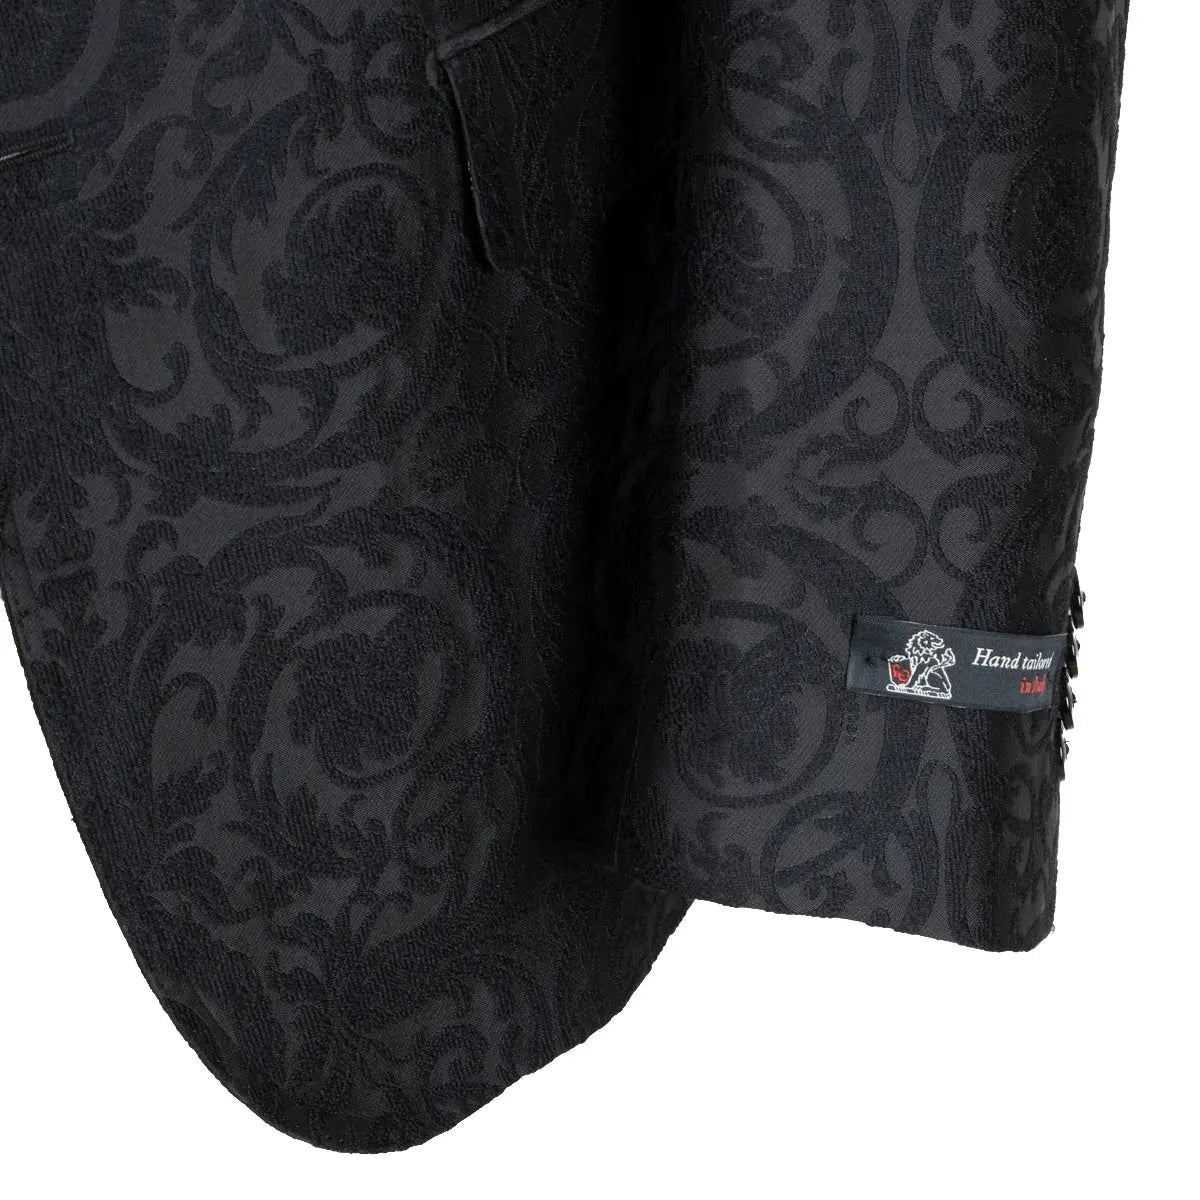 Black Wool & Silk Jacquard Woven Jacket  Robert Old   